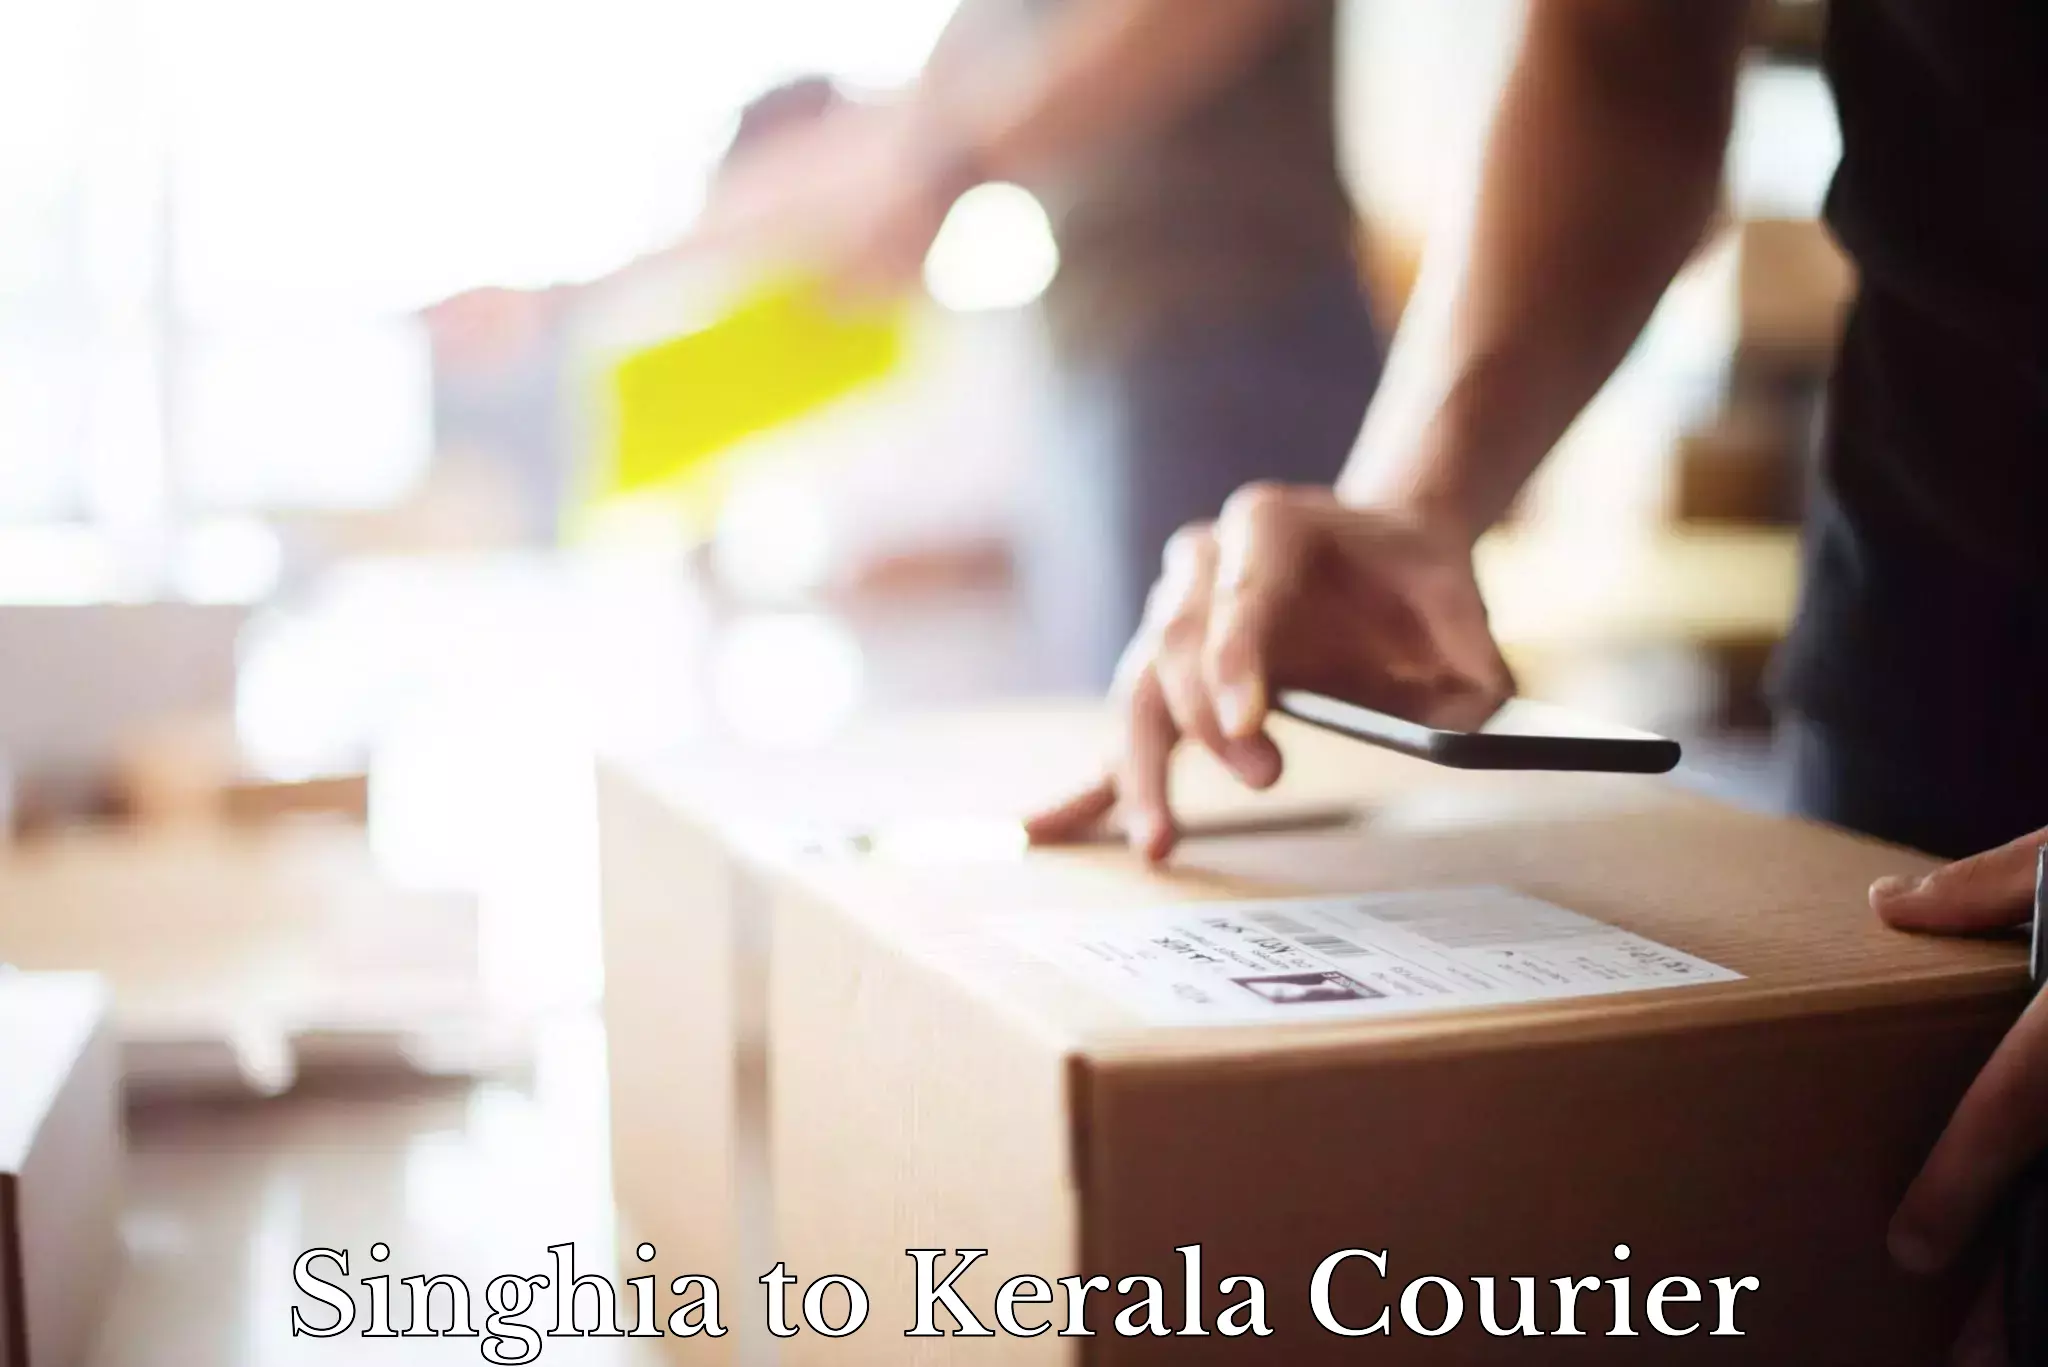 High-efficiency logistics Singhia to Kerala